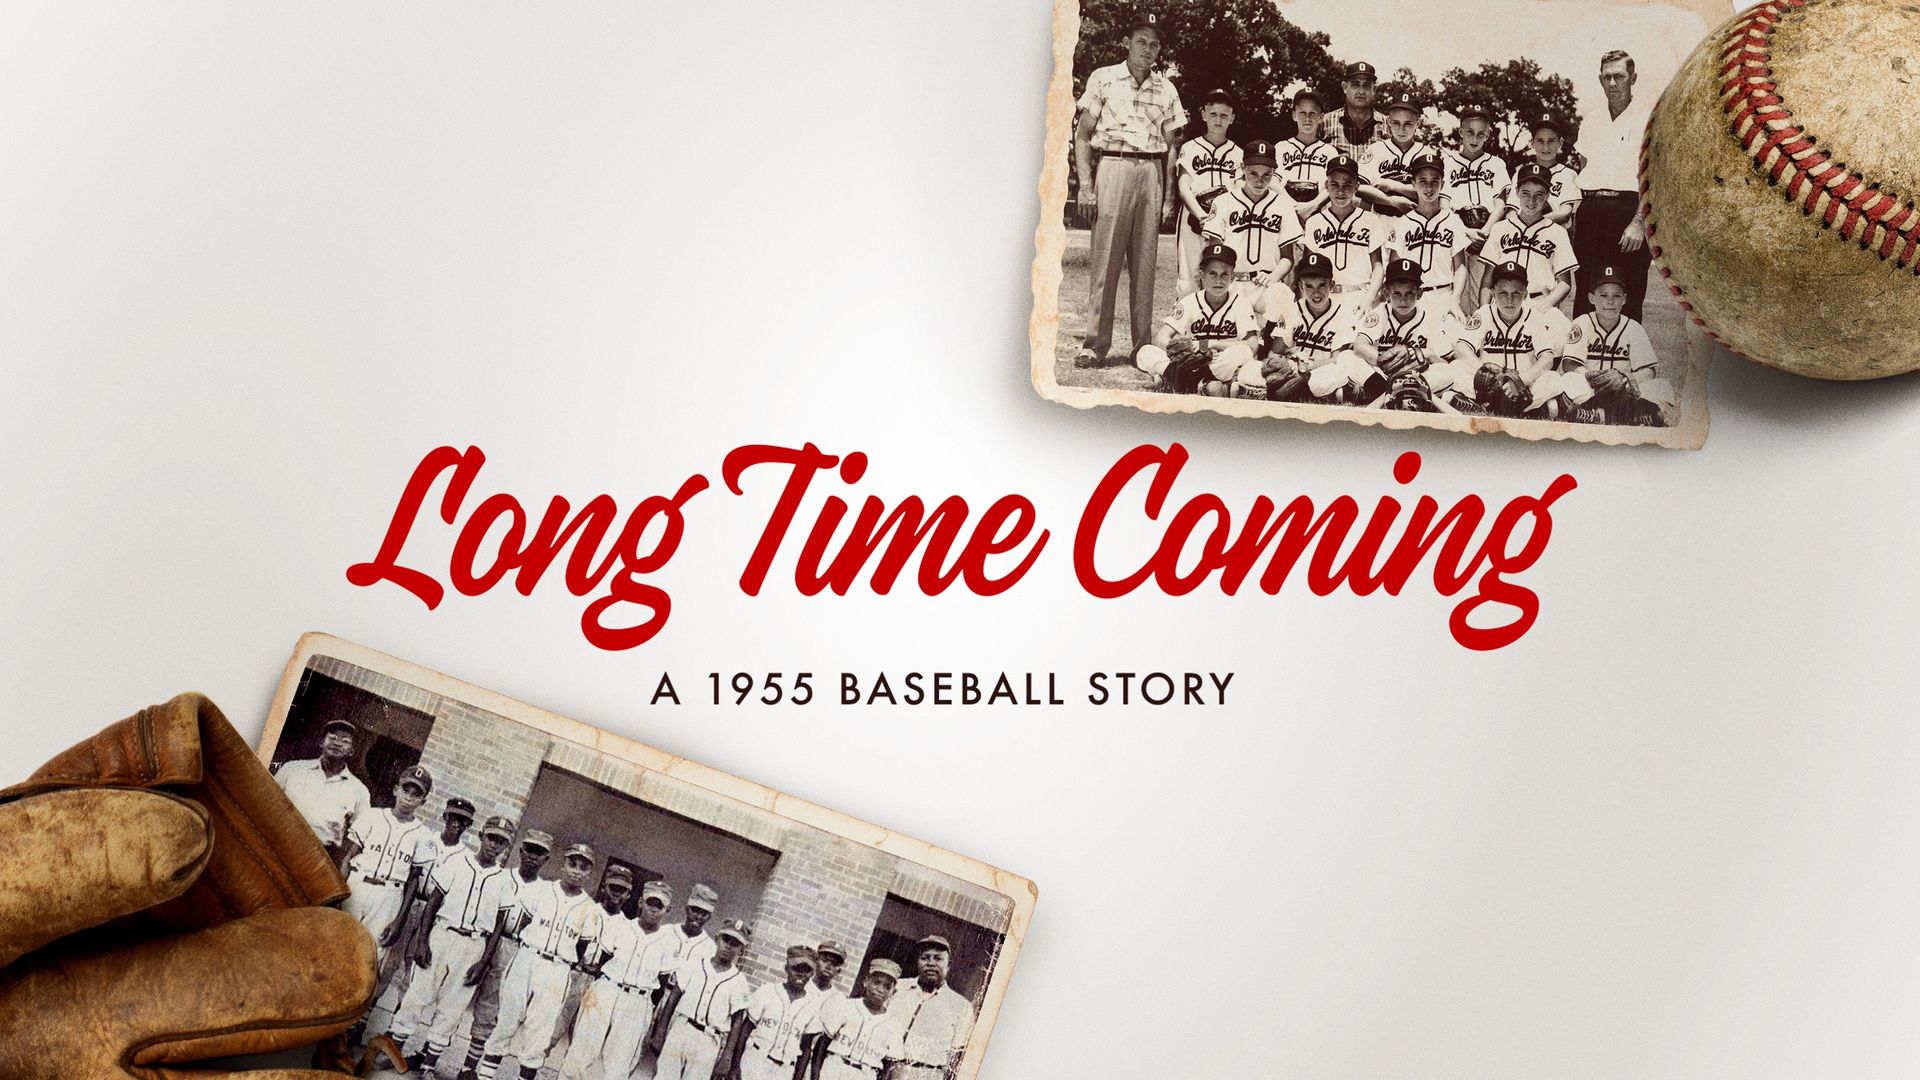 Long Time Coming: A 1955 Baseball Story Backdrop